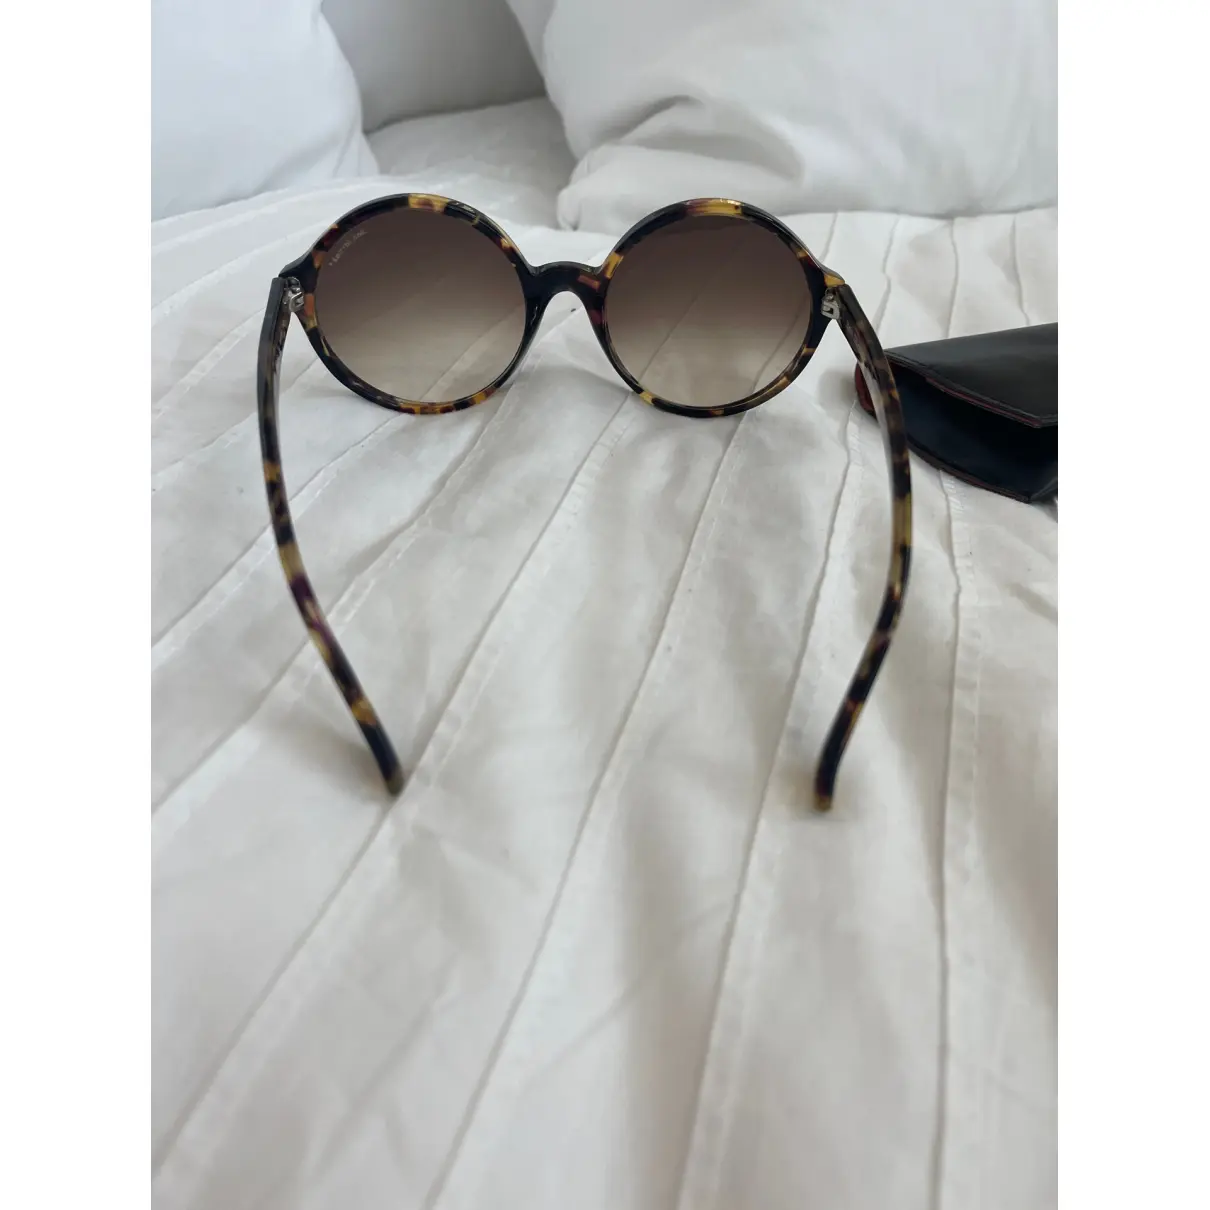 Luxury Bob Sdrunk Sunglasses Women